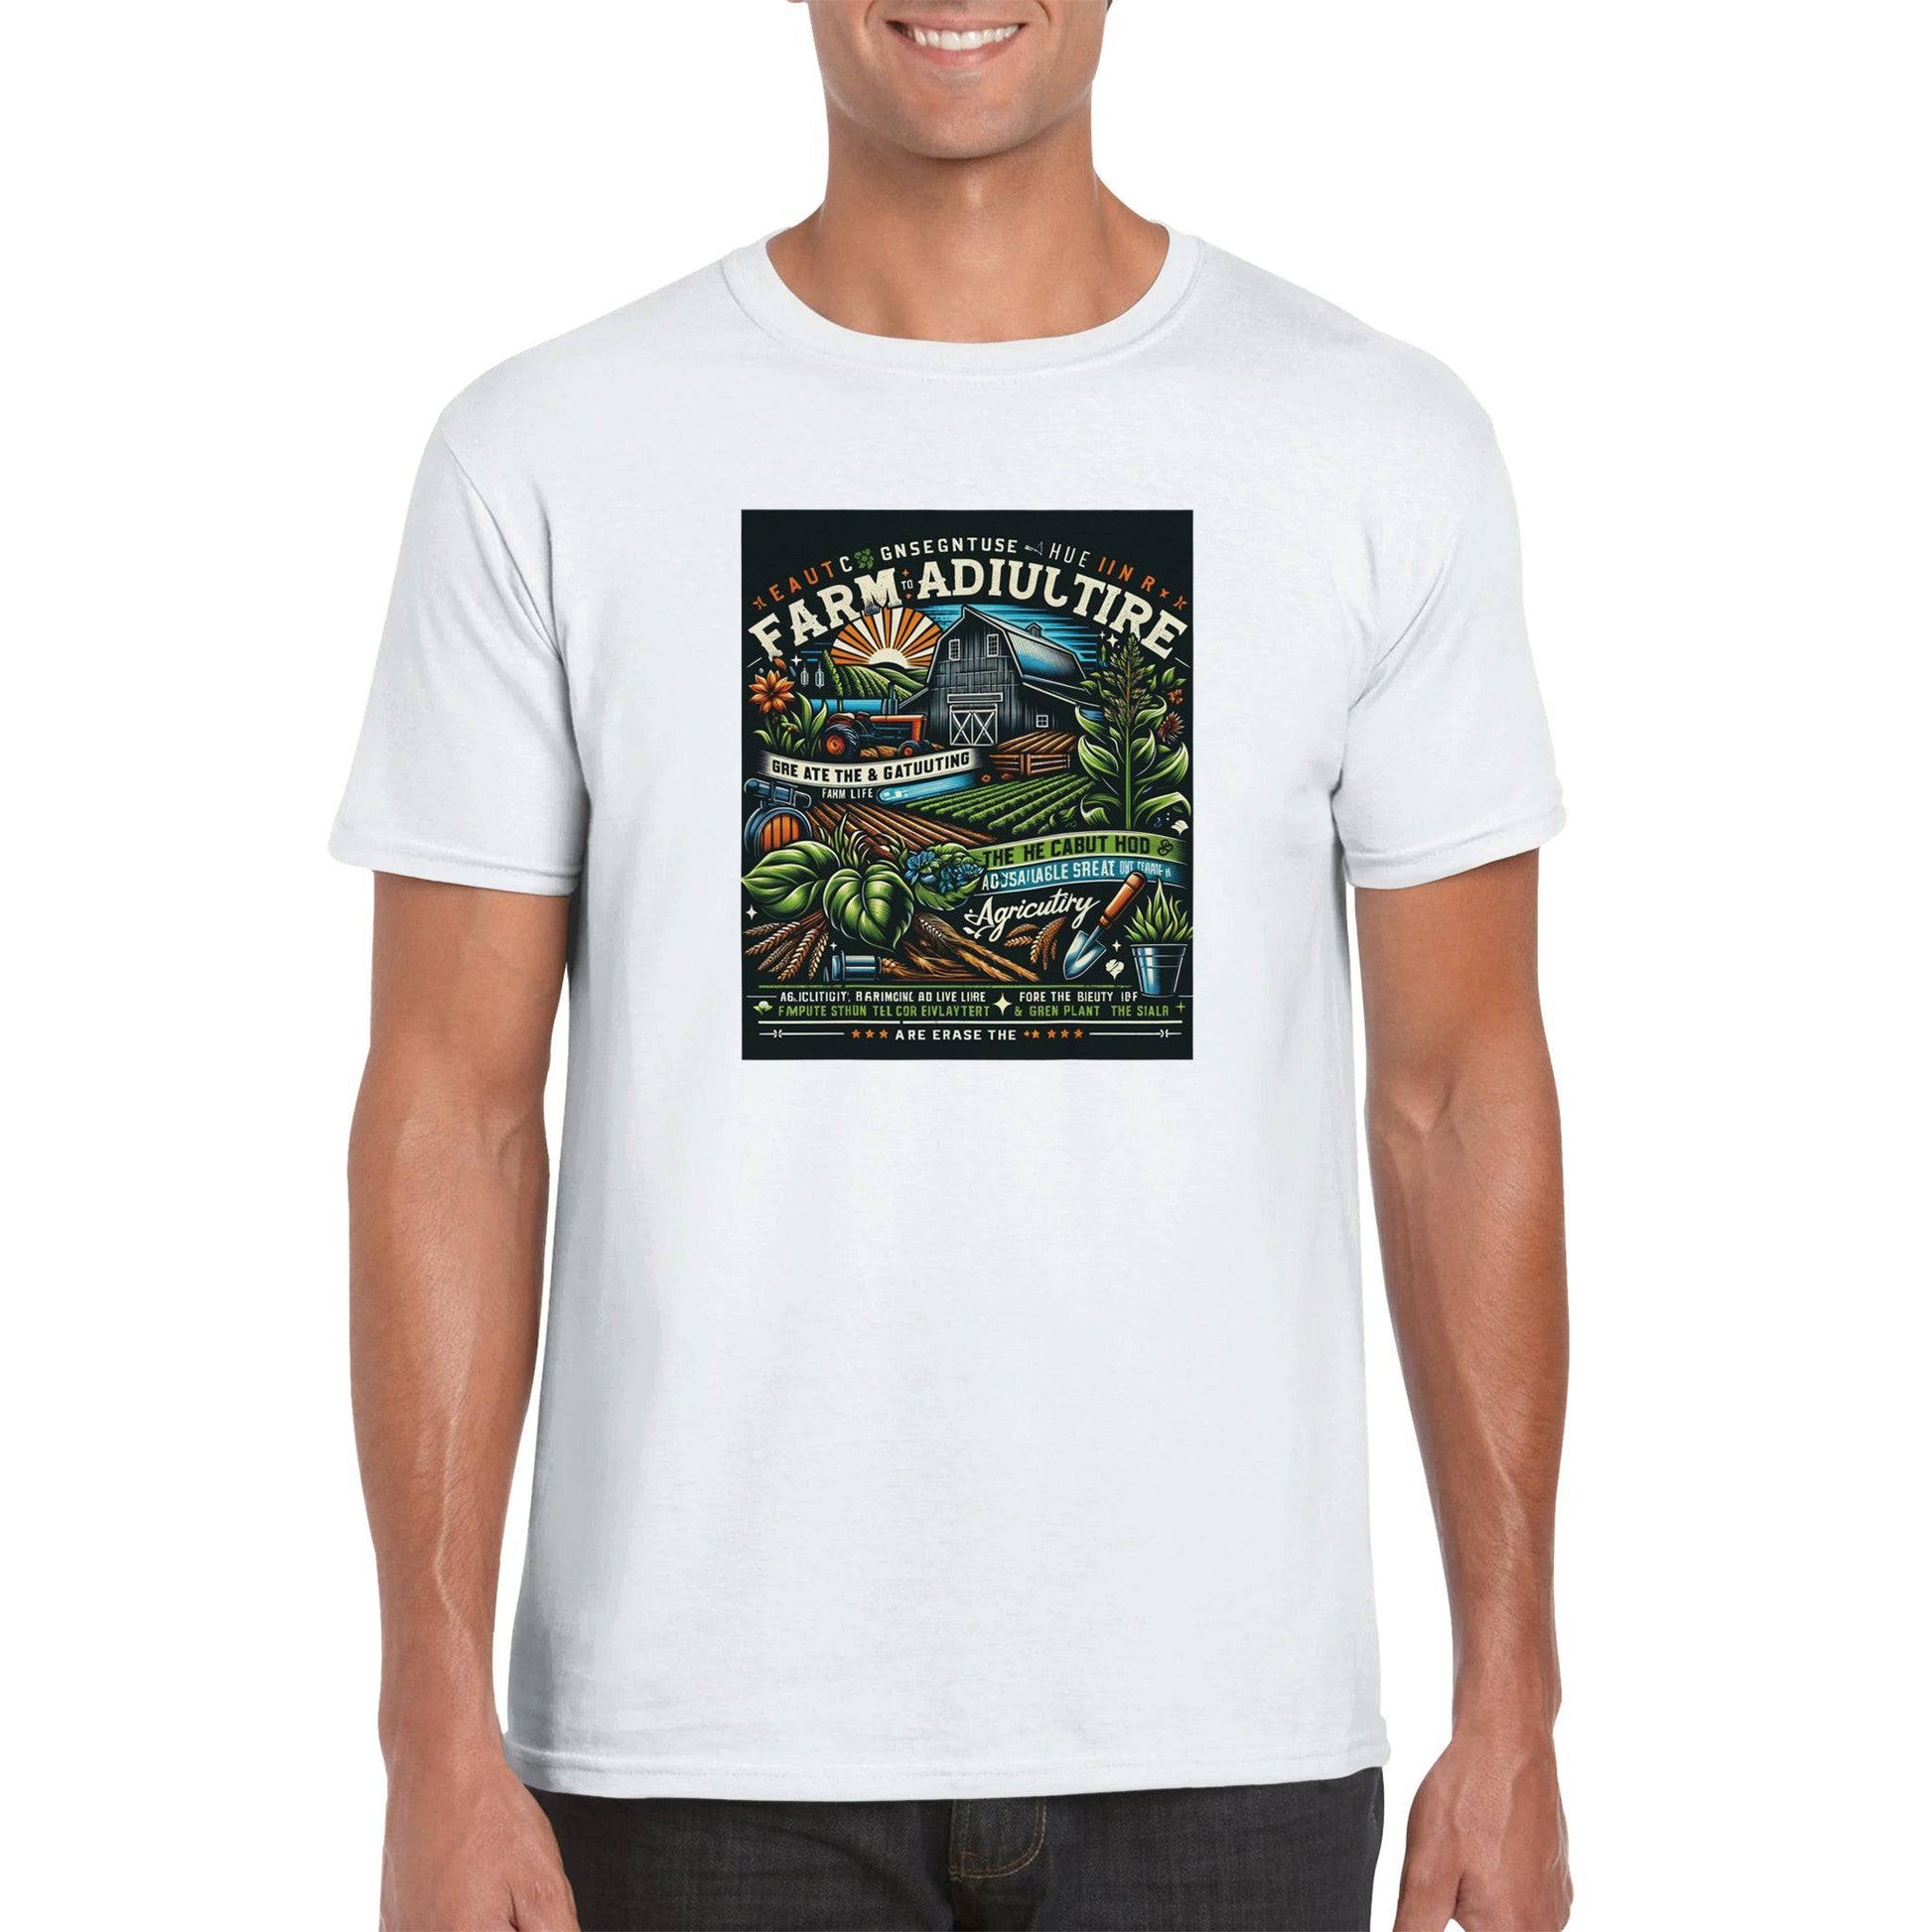 Classic Crewneck "Barnyard Bliss" Farm T-Shirt - 100% soft, breathable cotton - BeinCart